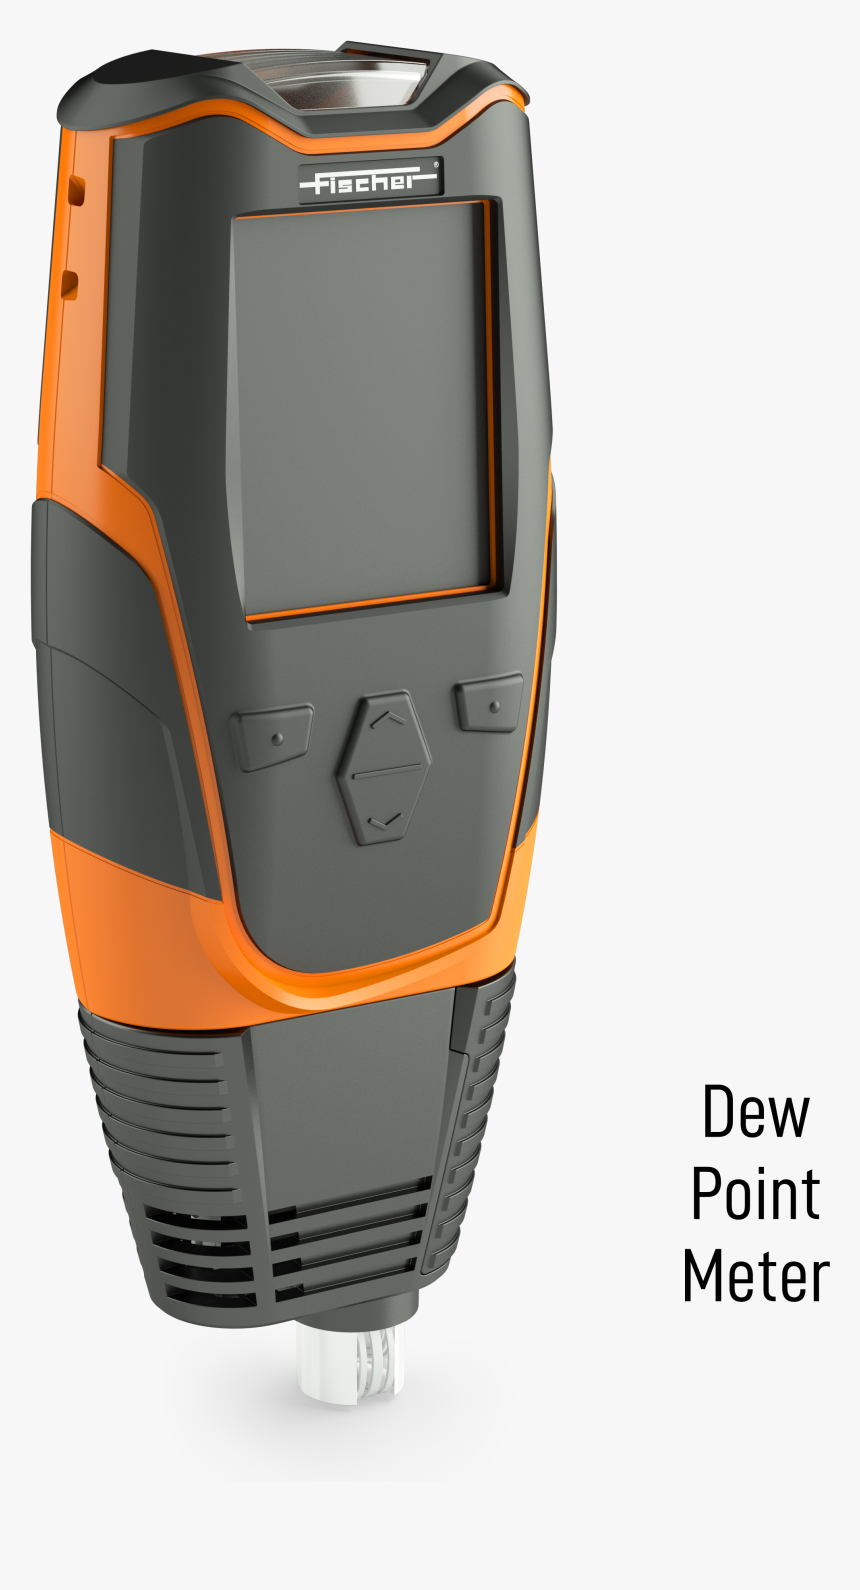 Dew Point Meter - Gauge, HD Png Download, Free Download